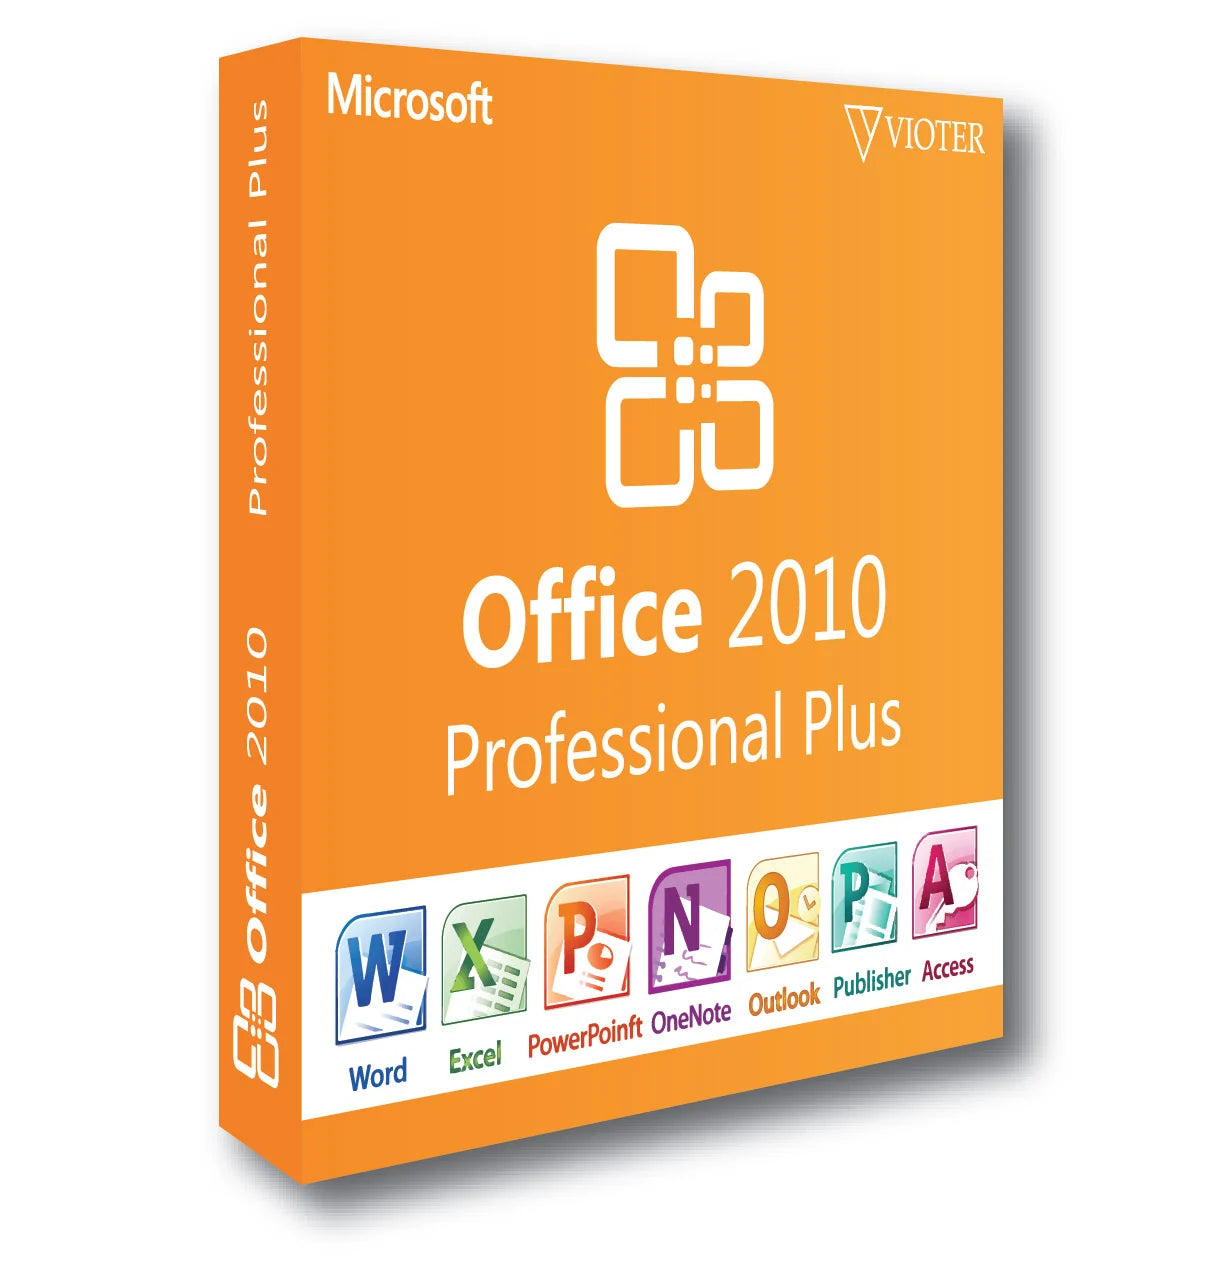 Microsoft Office 2010 Professional Plus - Lifetime Activation